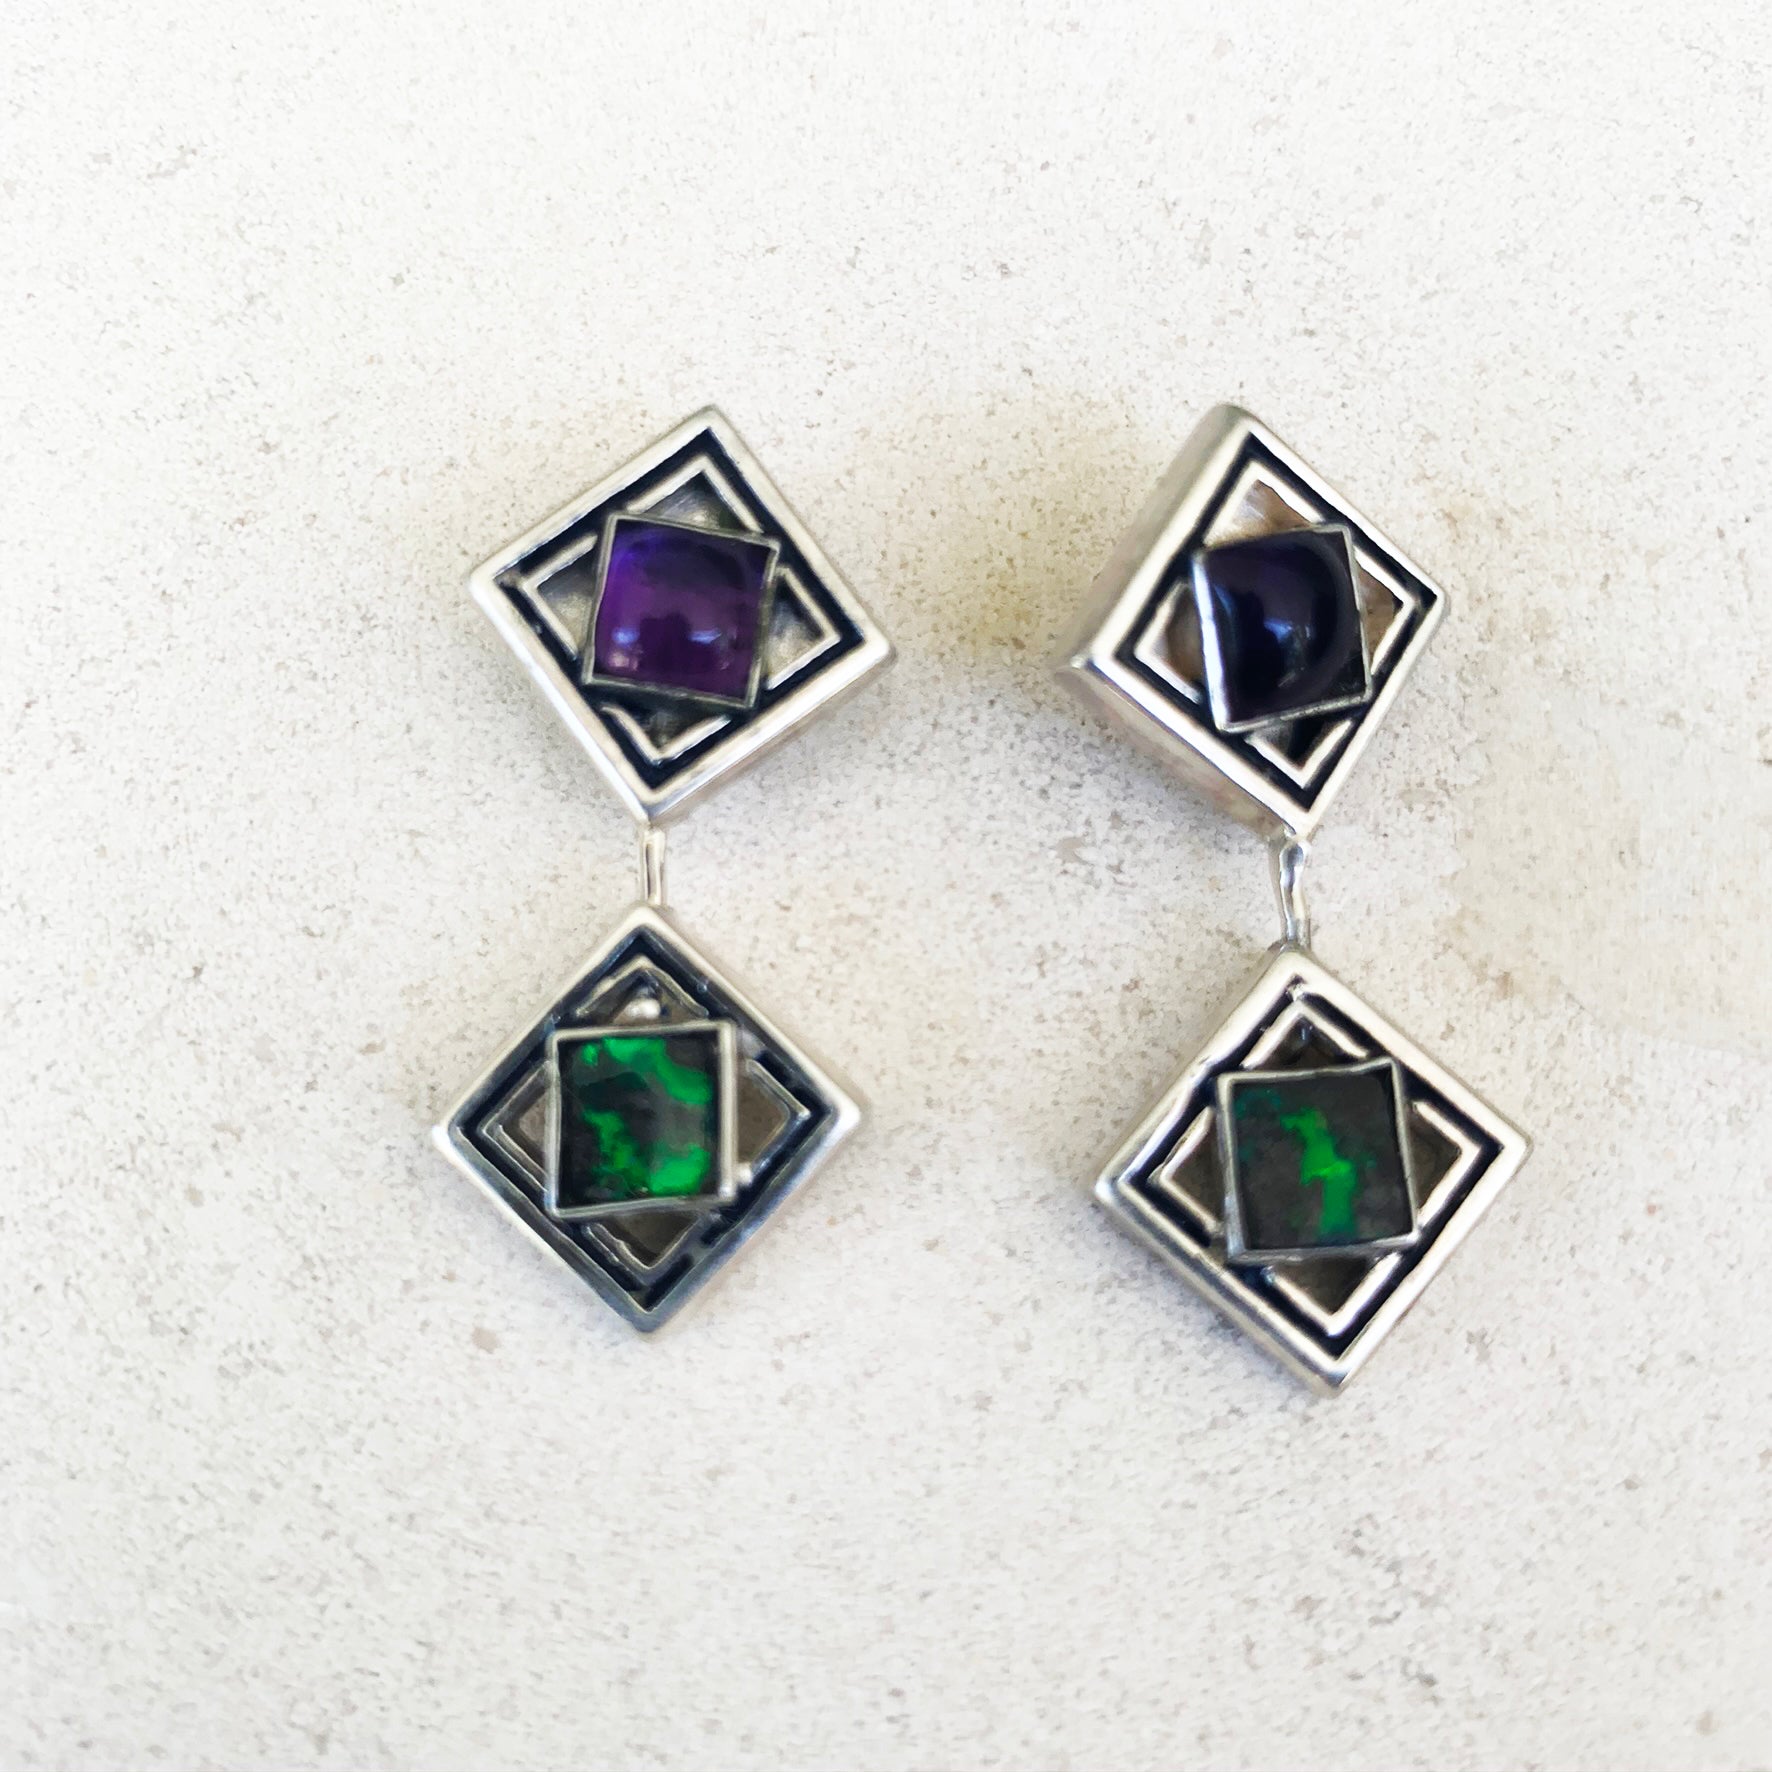 Green boulder opal and amethyst Giometria earrings